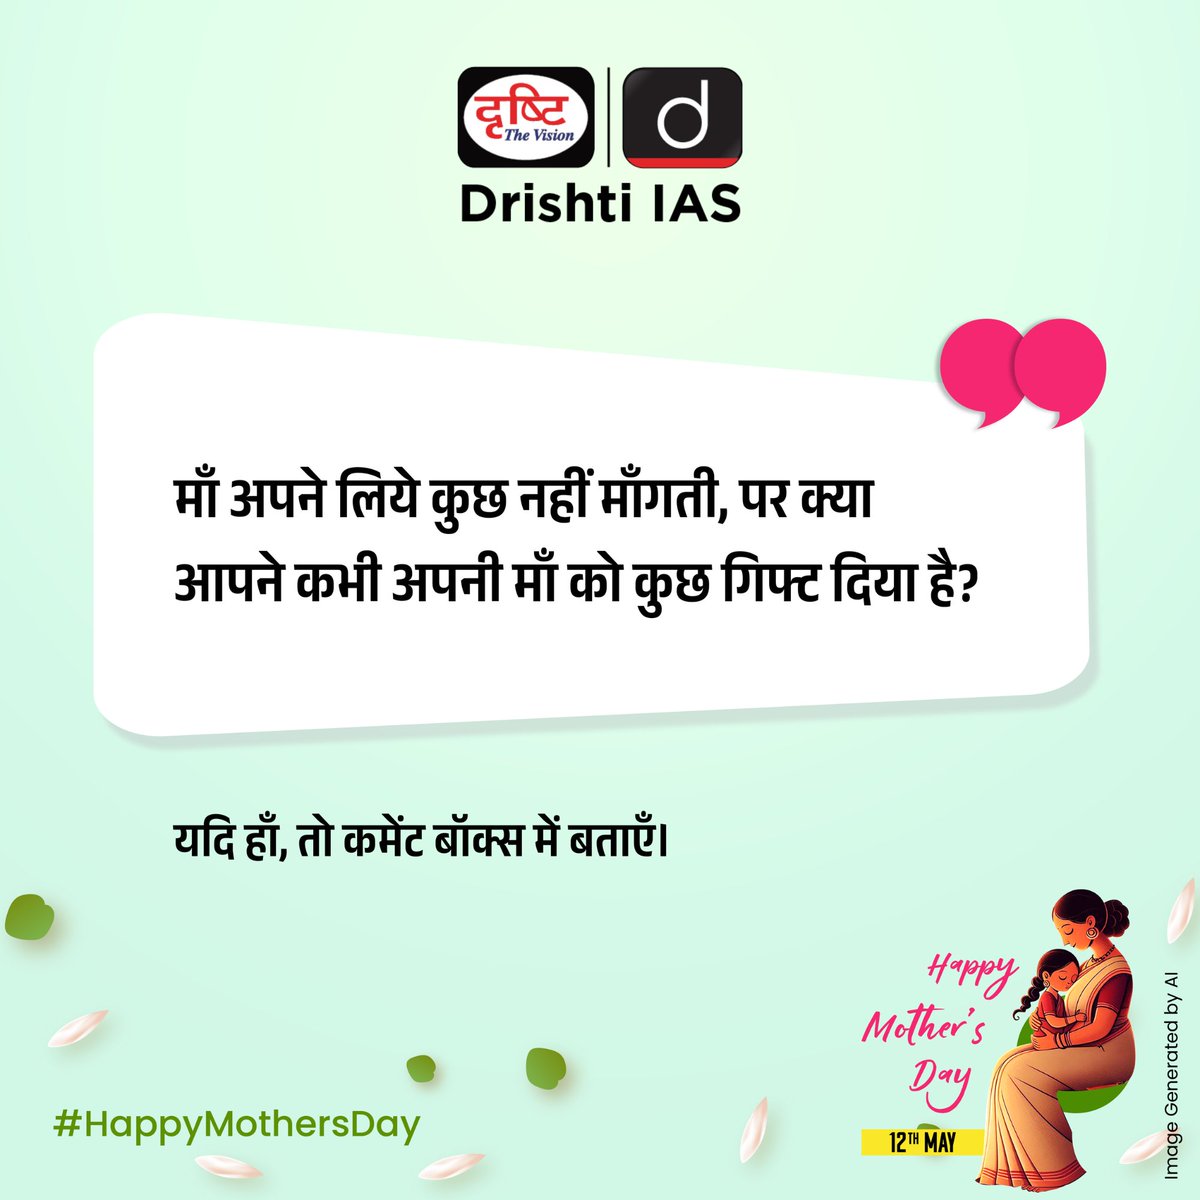 अपना उत्तर हमें कमेंट बॉक्स में बताएँ। #MothersDay2024 #HappyMothersDay #Maa #MothersDayGift #Love #Family #MotherHood #MomLife #InternationalMothersDay #MaaKaPyar #DrishtiIAS #DrishtiPCS